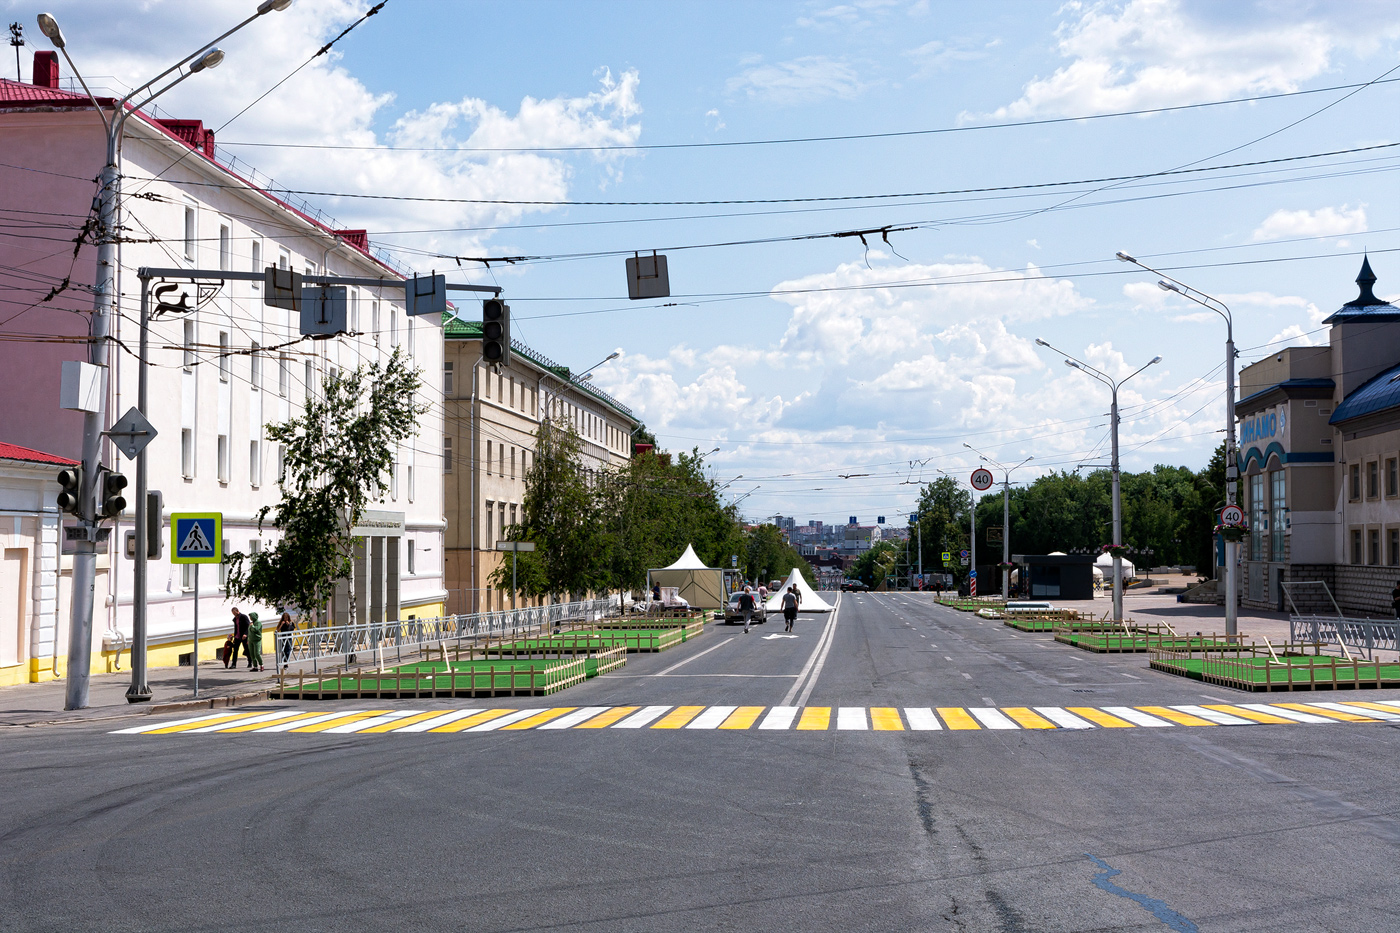 Ufa — Line removals; Ufa — Withdrawn trolleybus lines